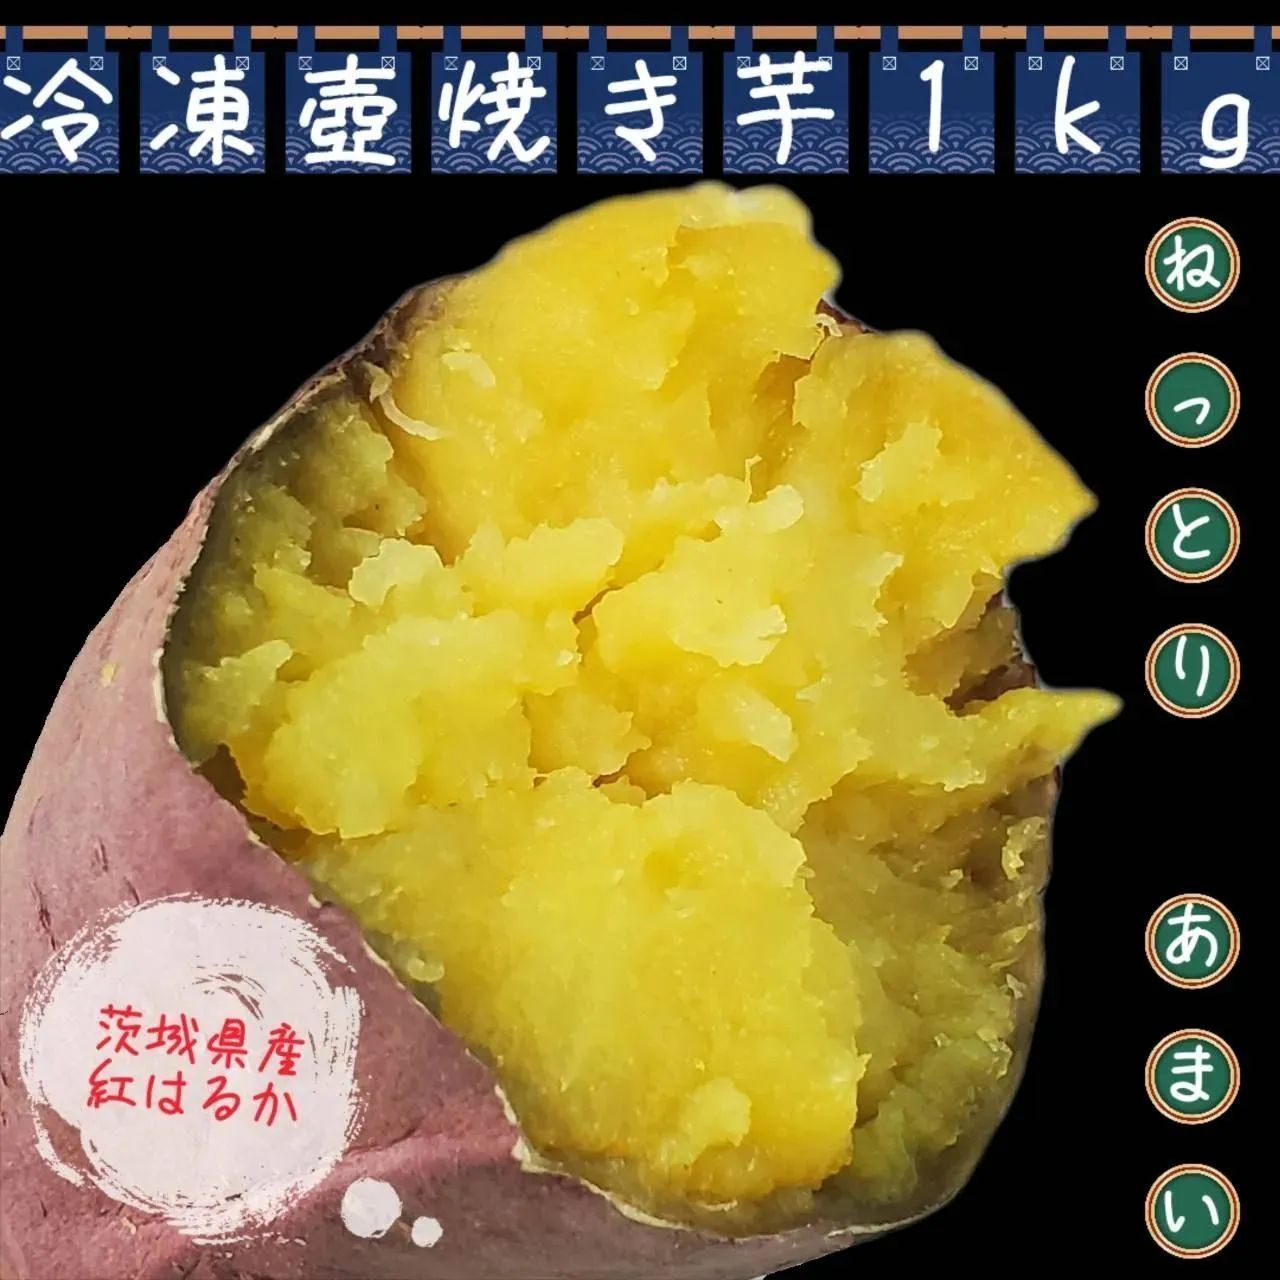 1kg　就労さぽーと　メルカリ　茨城県産　じっくり焼き上げた　壺焼き芋????　冷凍　蜜た～っぷり????　紅はるか????